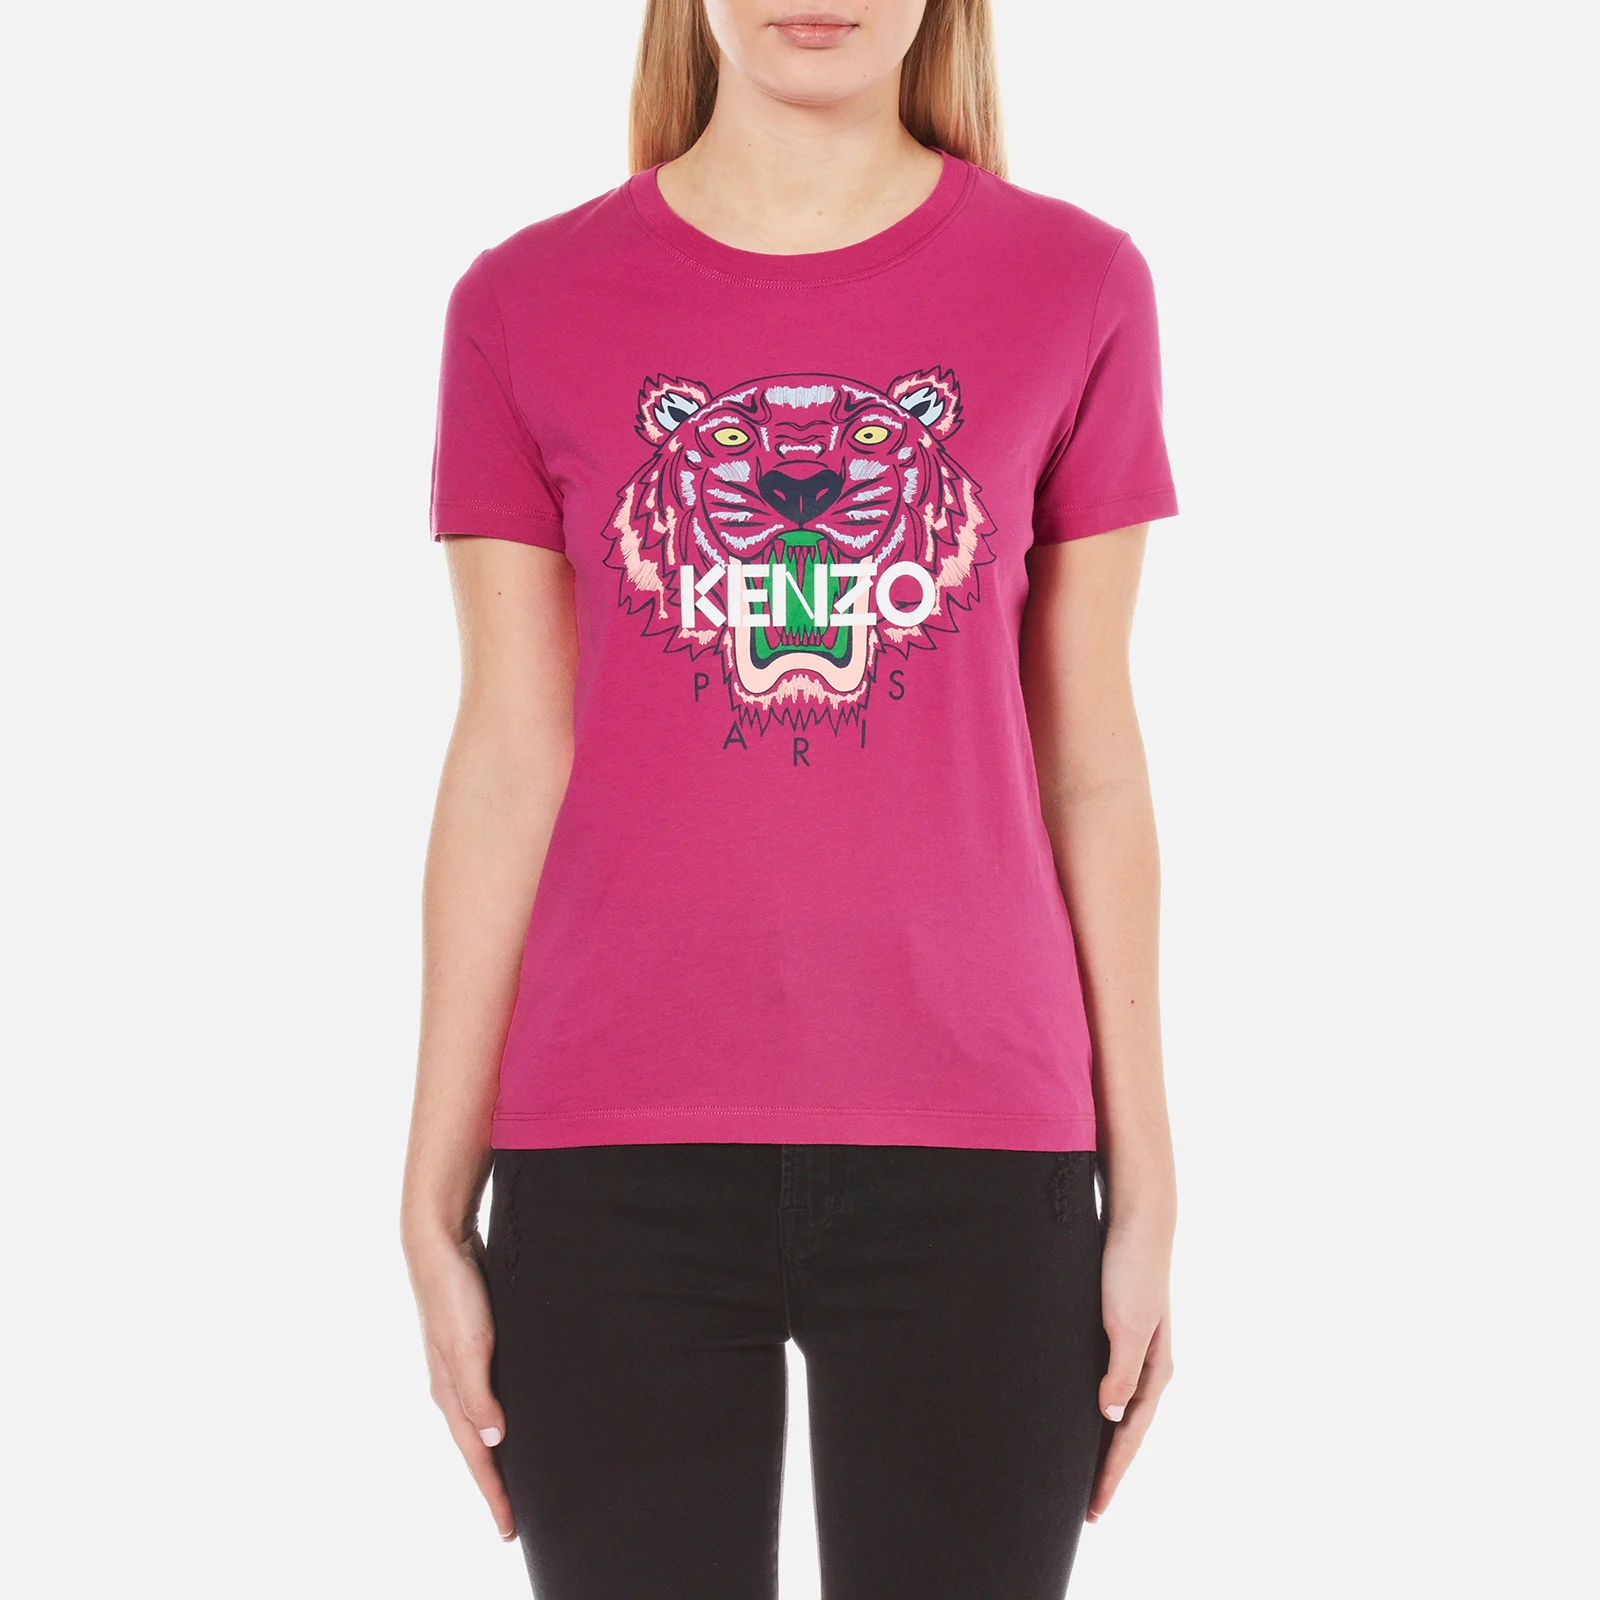 KENZO Women's Printed Tiger On Cotton Single Jersey T-Shirt - Pink Image 1